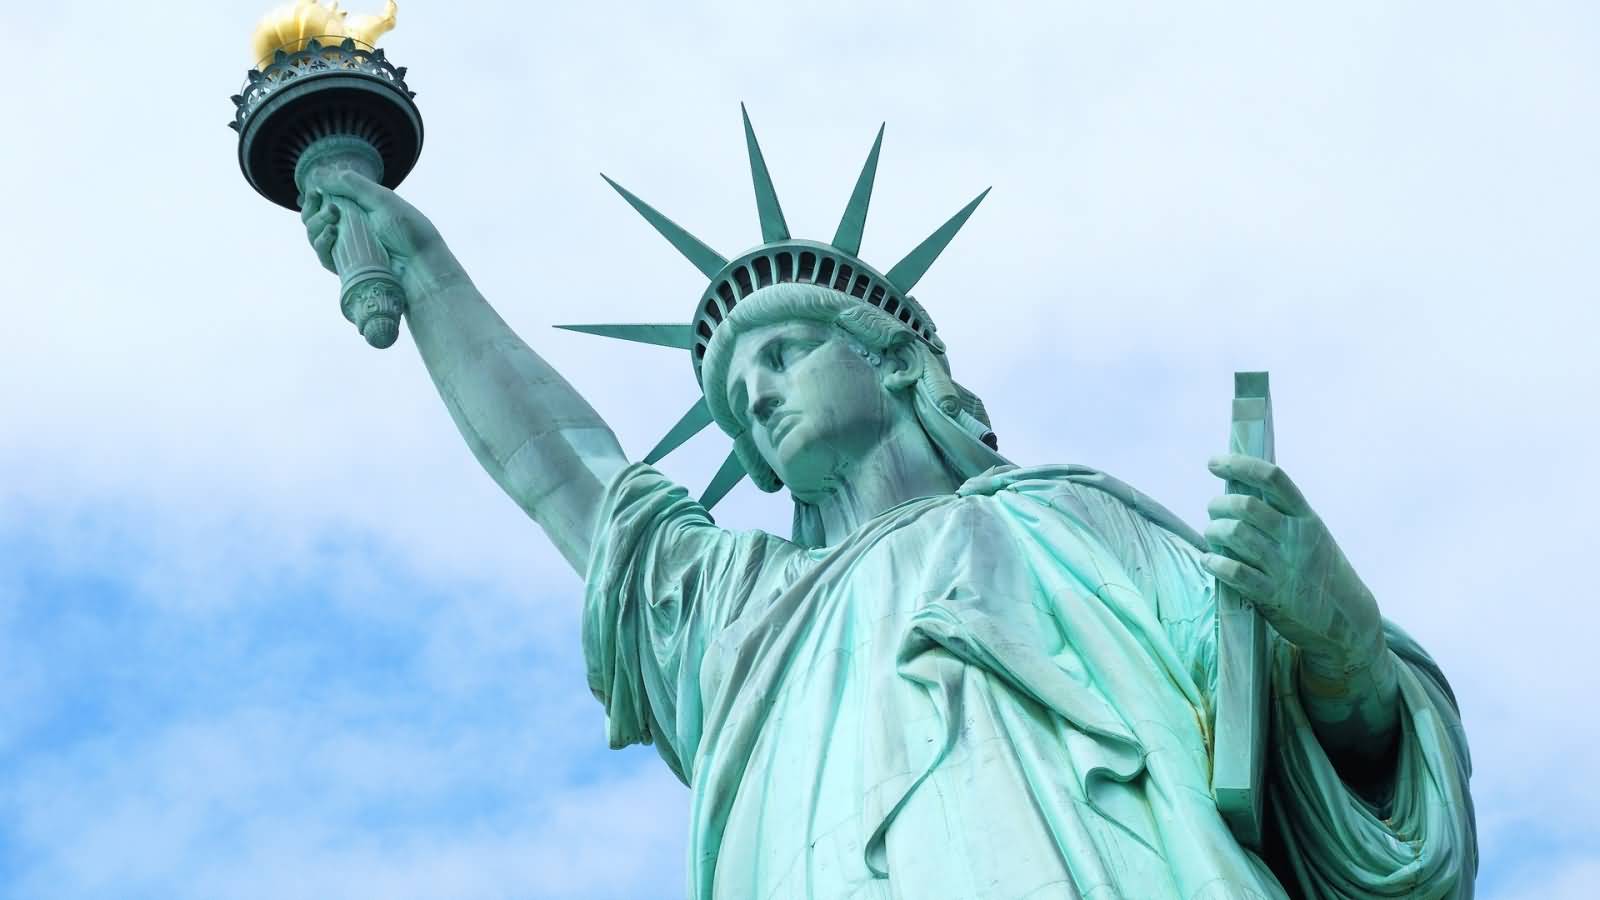 Statue Of Liberty Closeup Image